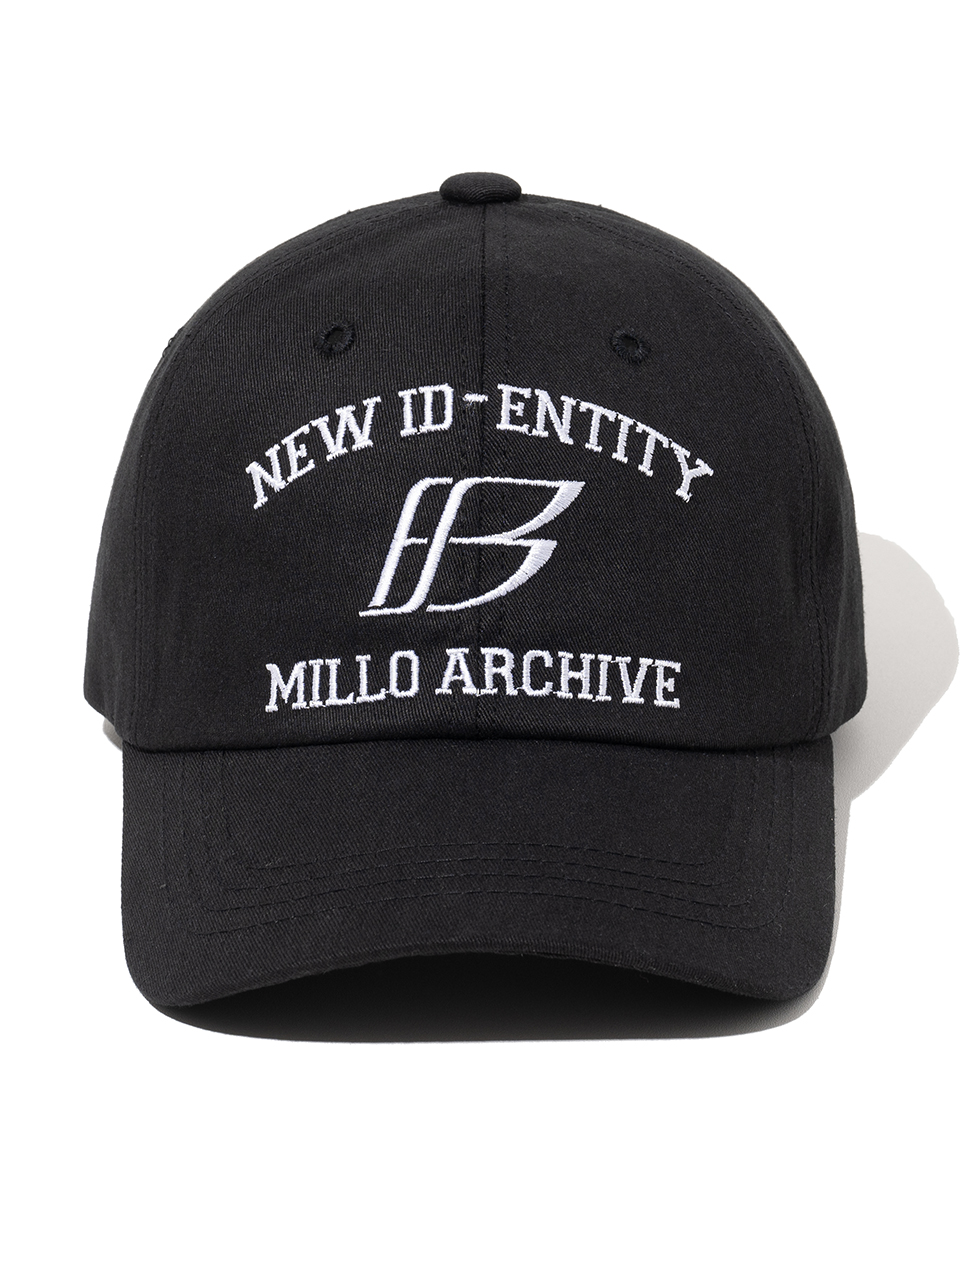 New Id-entity Ball Cap - Black